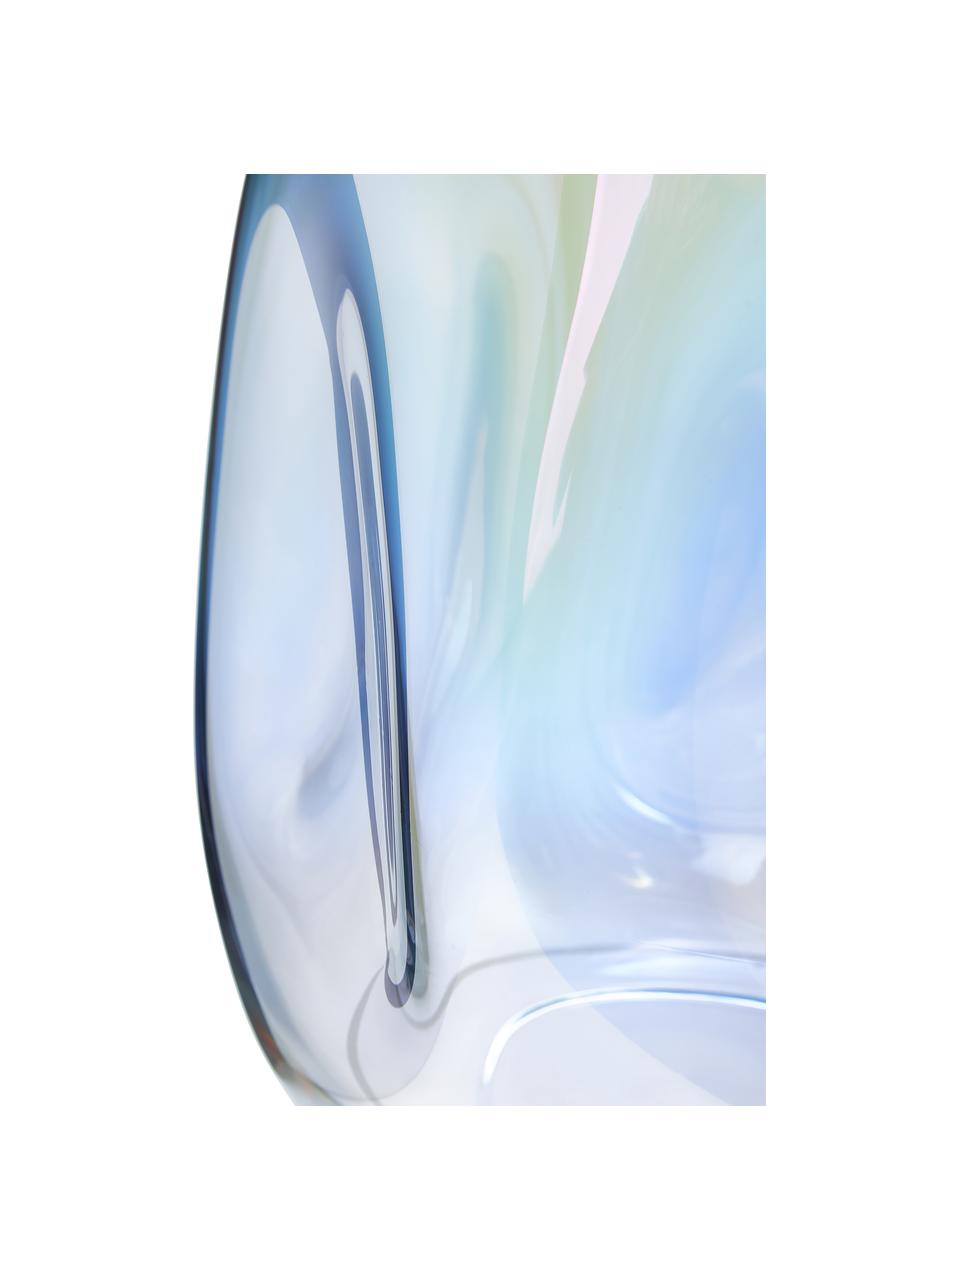 Grote mondgeblazen glazen vaas Rainbow, iriserend, Mondgeblazen glas, Transparant, meerkleurig, Ø 20 x H 35 cm